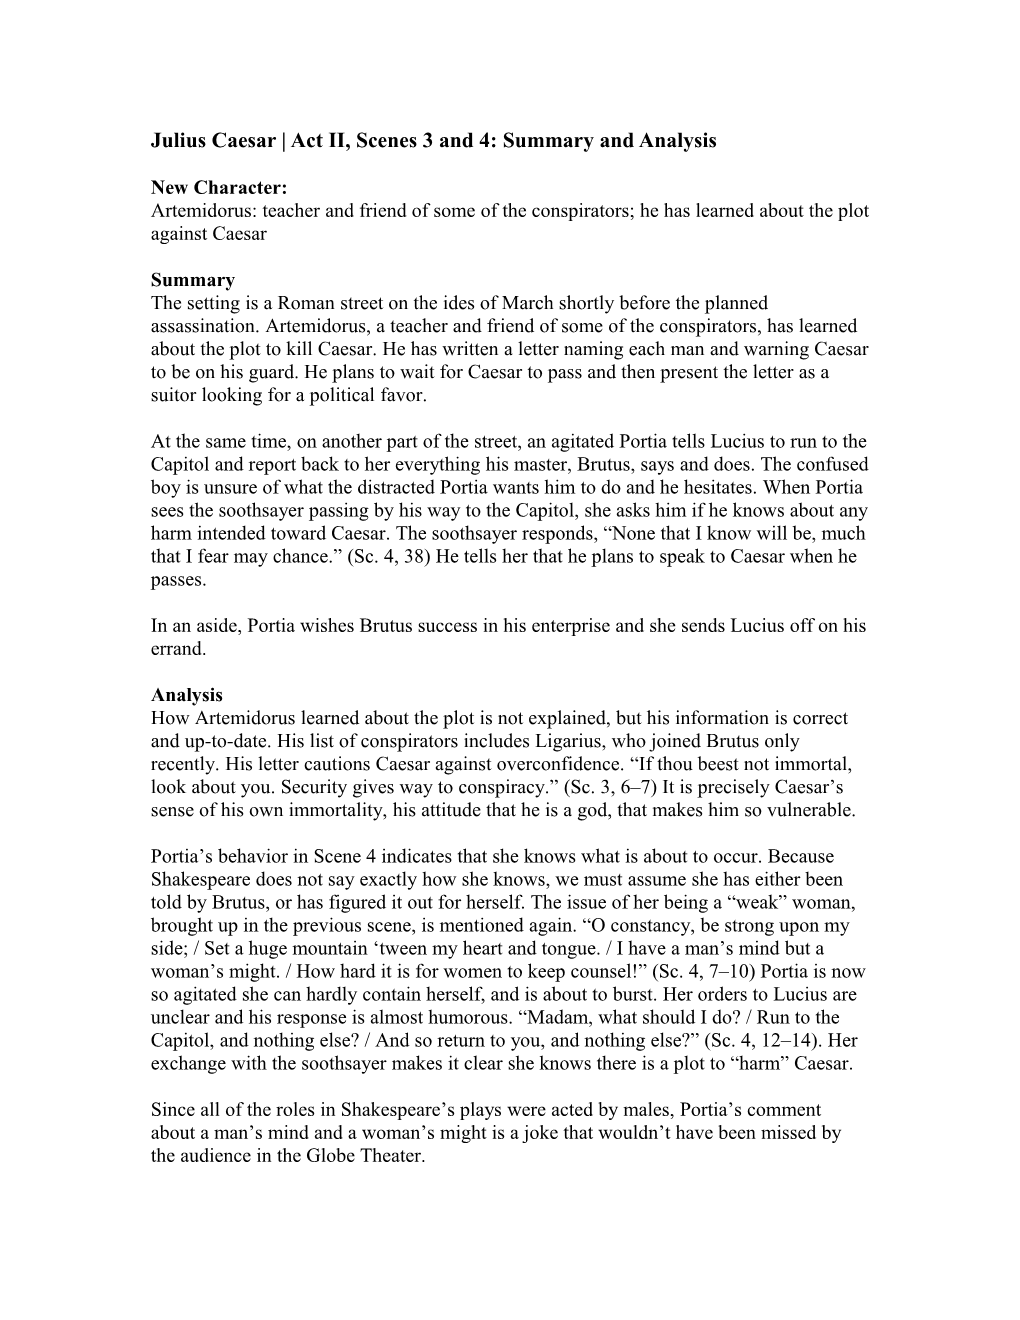 Julius Caesar Act II, Scenes 3 and 4: Summary and Analysis